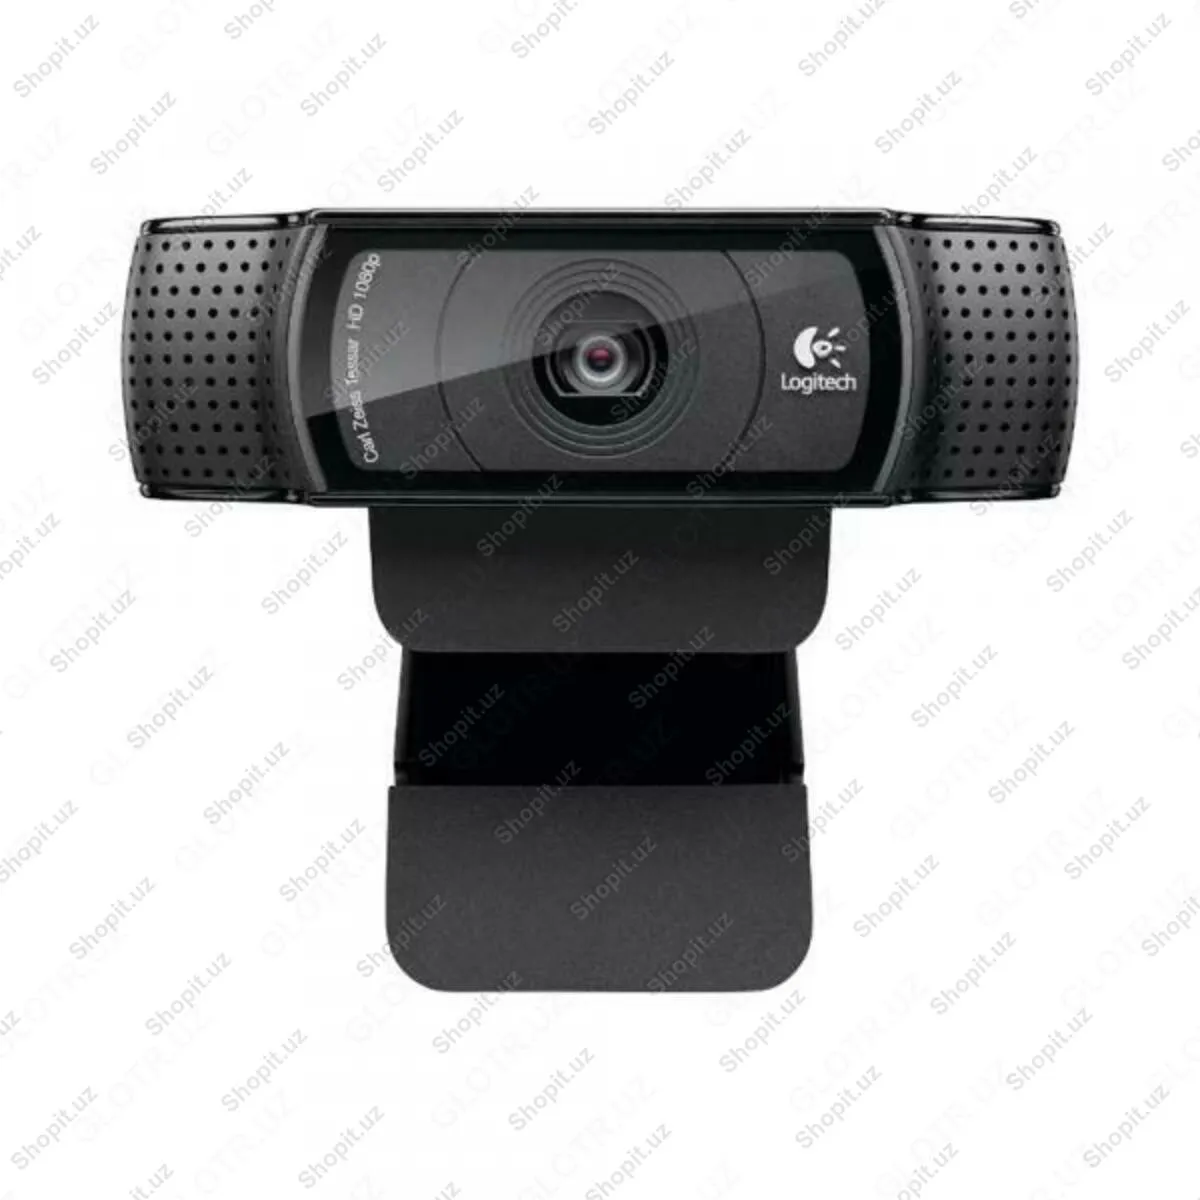 Veb-kamera - Logitech C920 (FullHD)#1